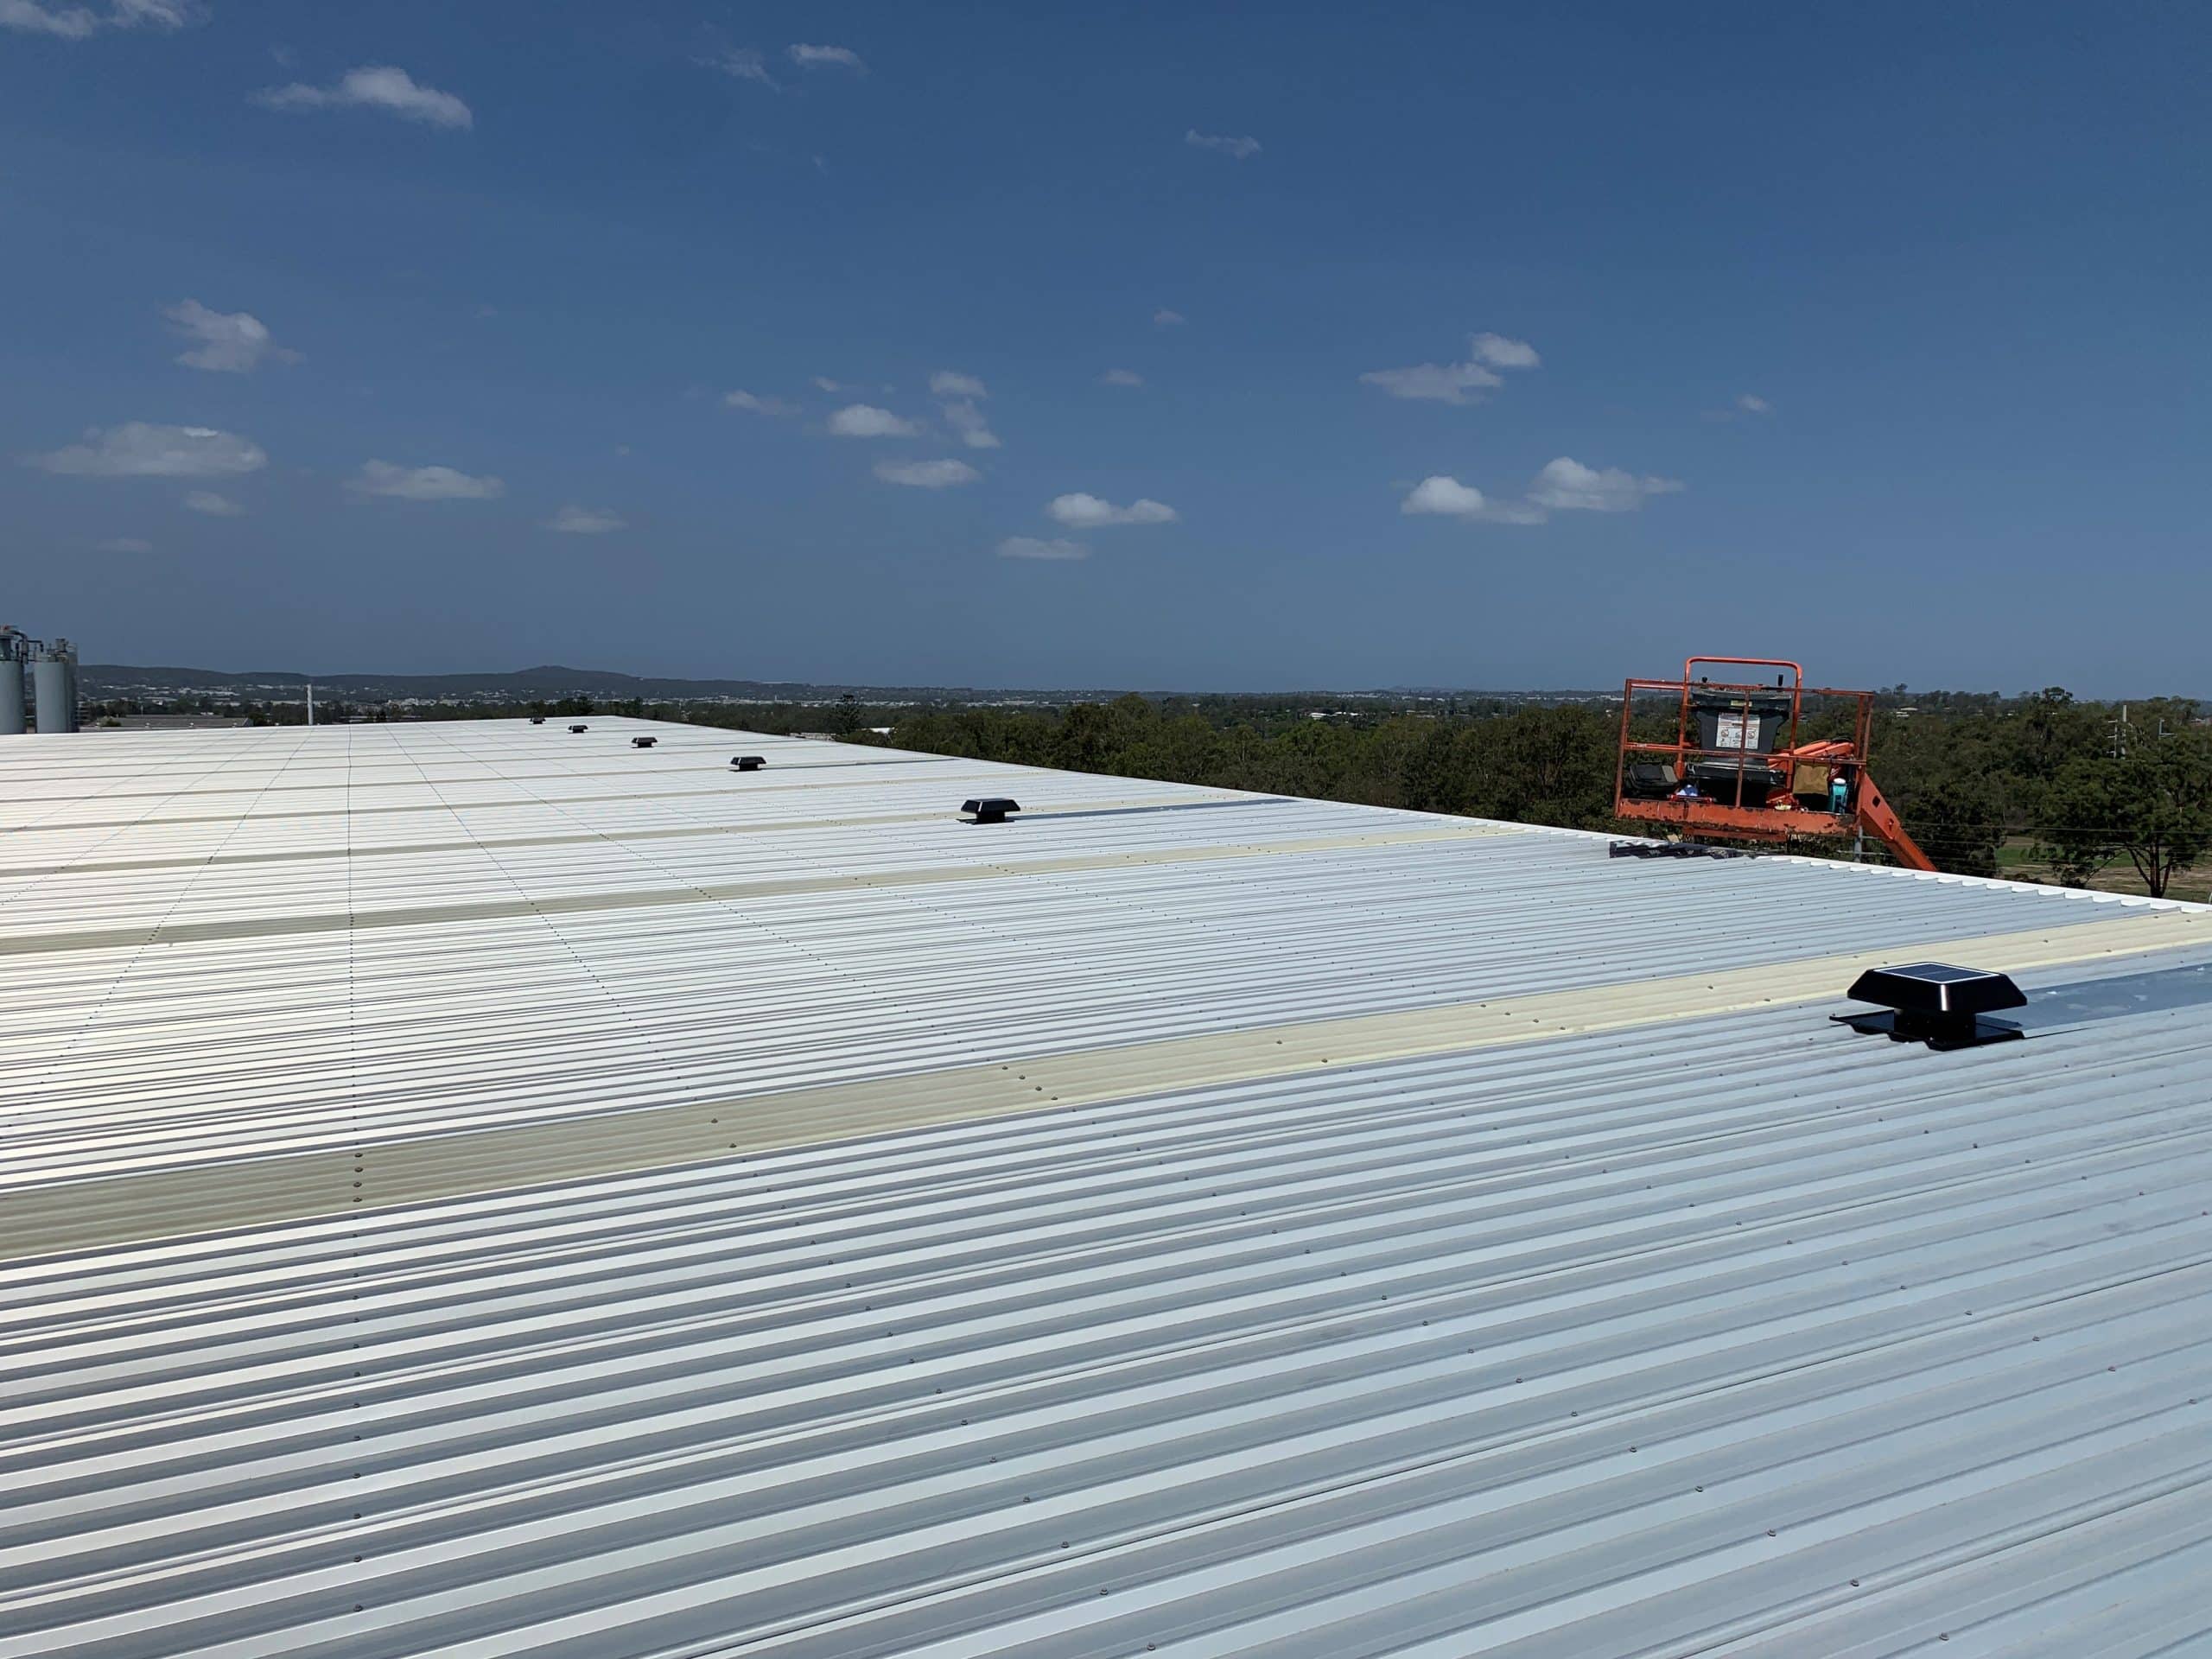 illume Solar Roof Ventilator - illume